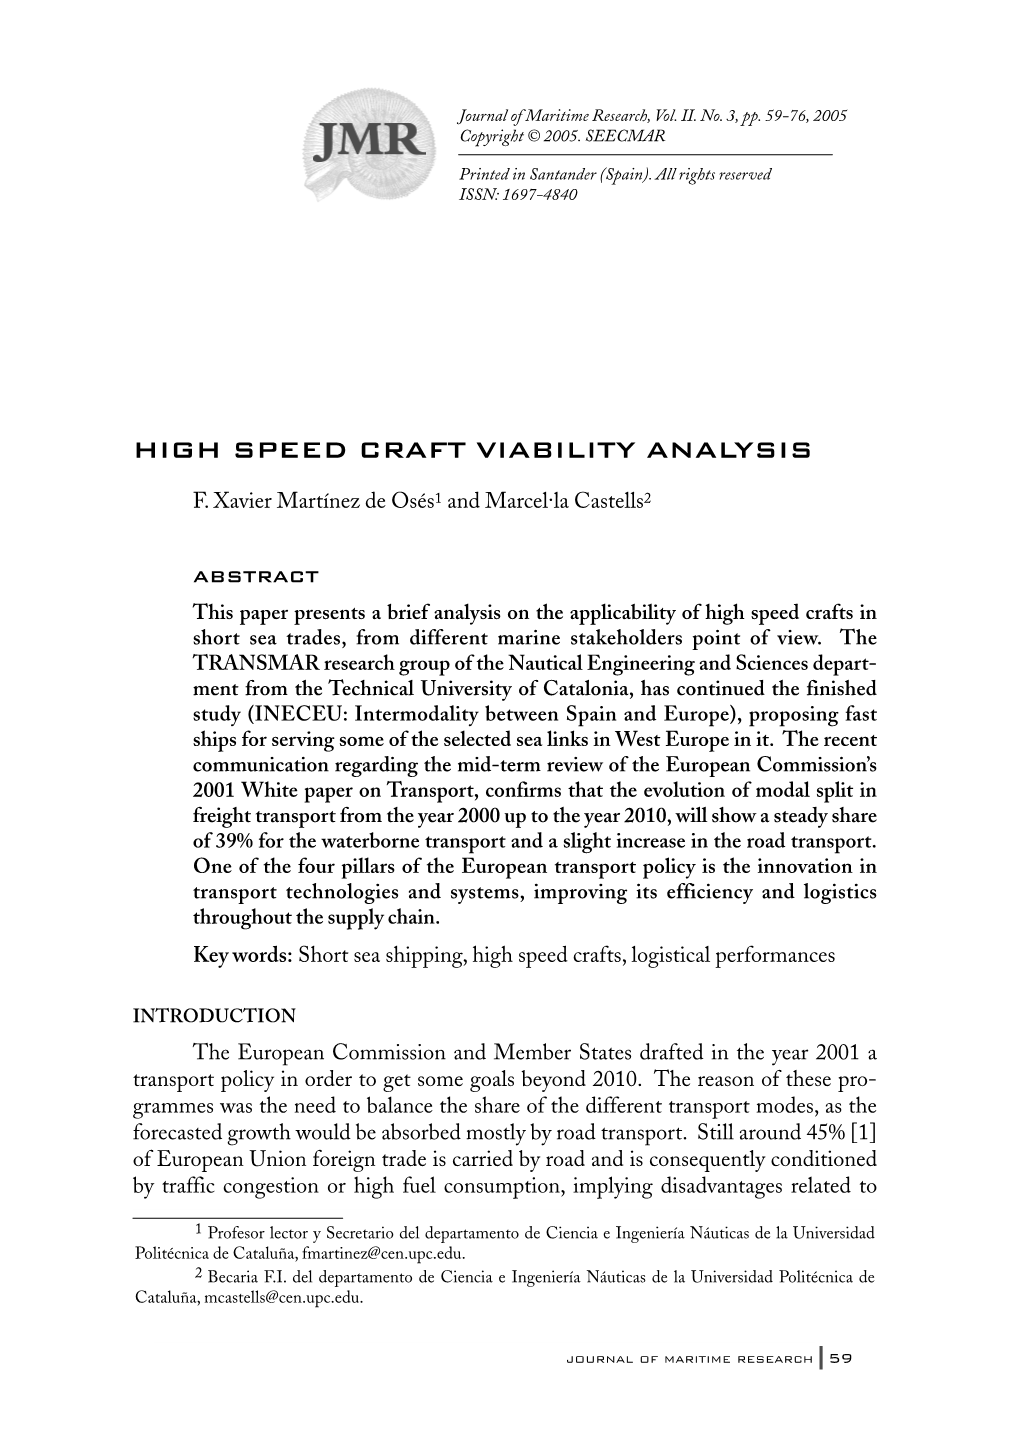 High Speed Craft Viability Analysis